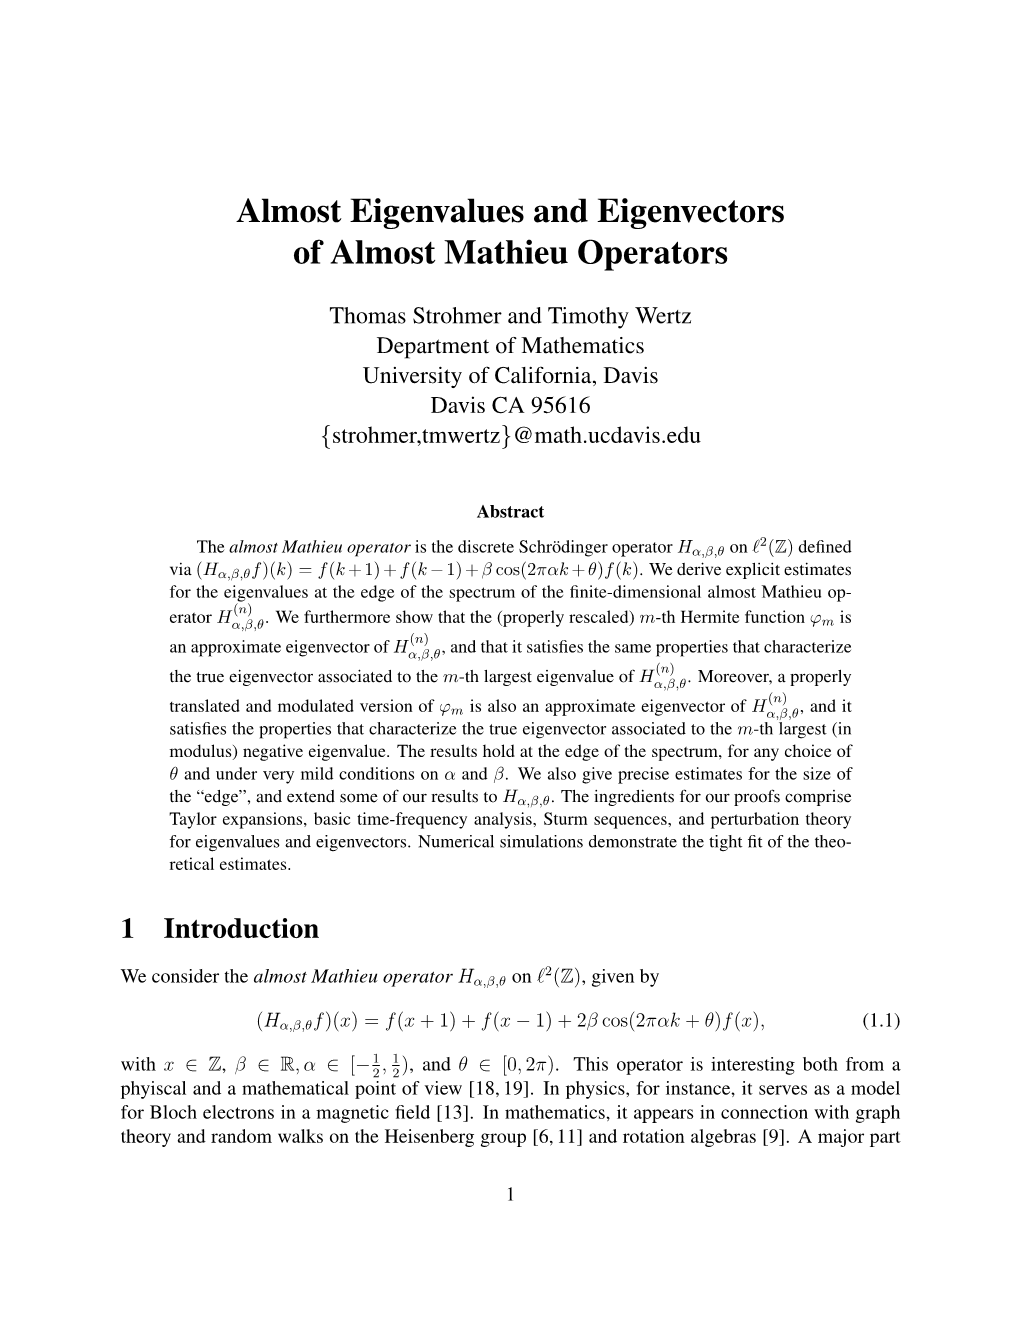 Almost Eigenvalues and Eigenvectors of Almost Mathieu Operators